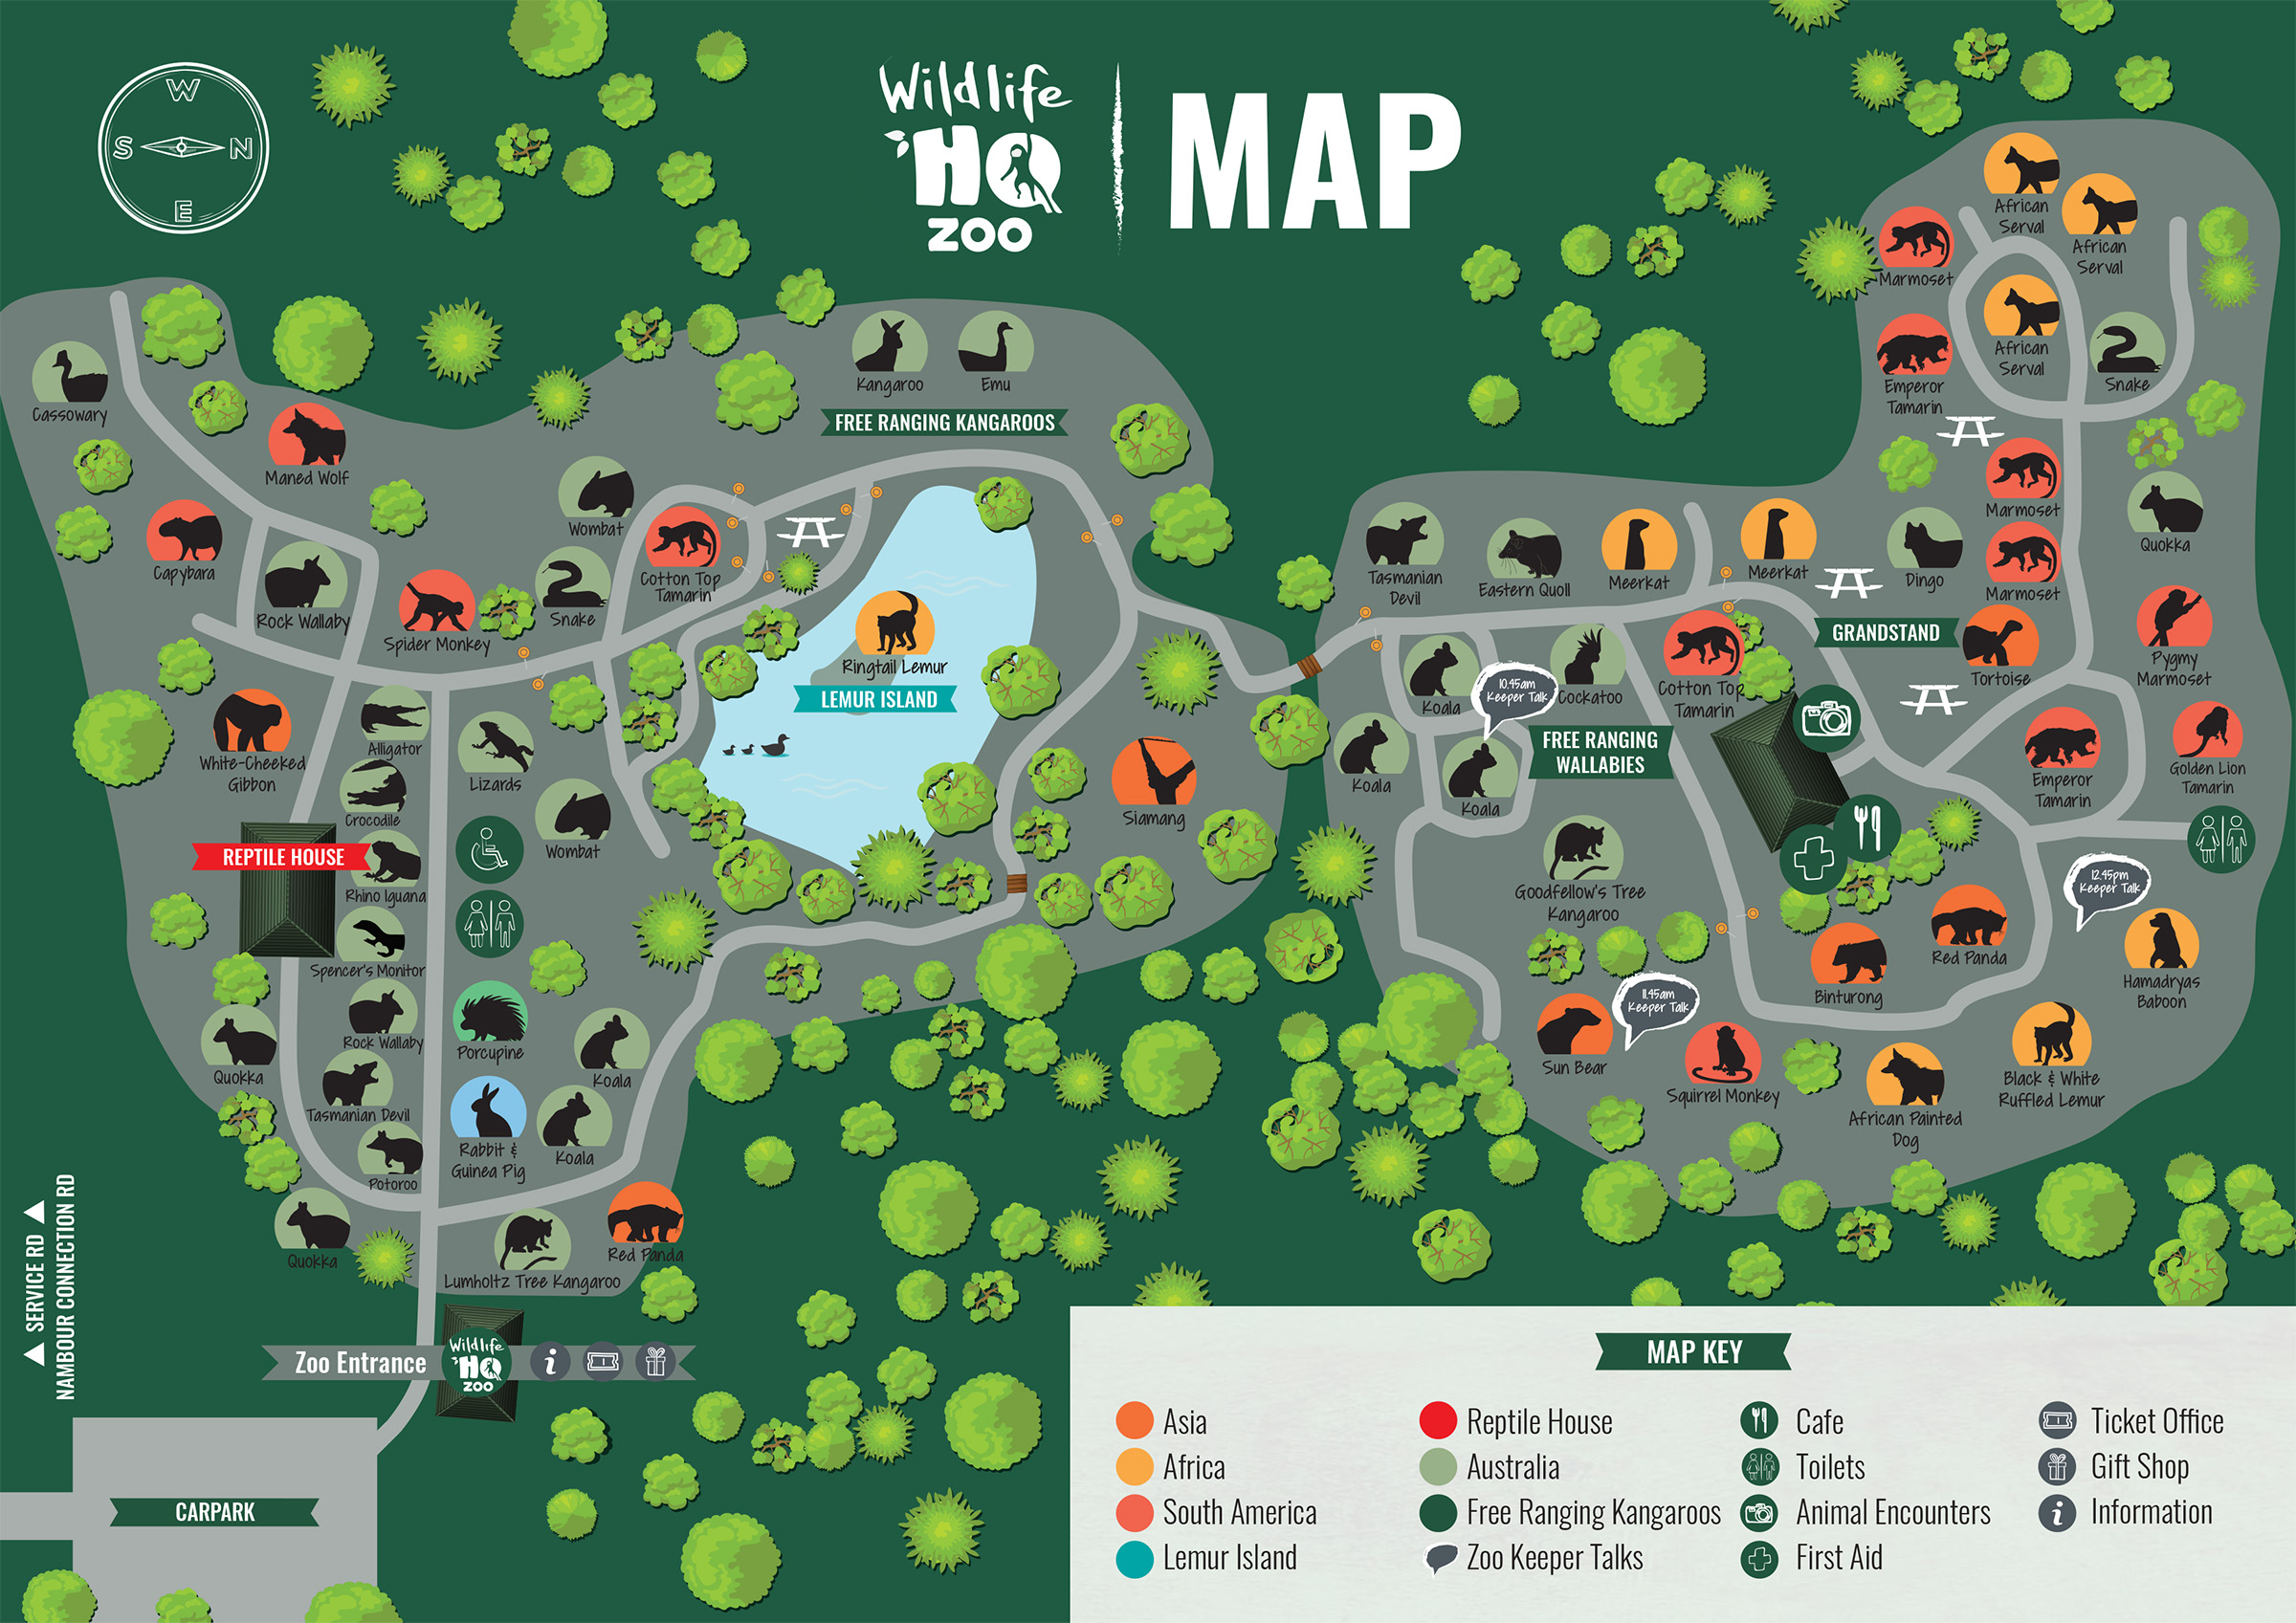 Wildlife HQ Zoo Map